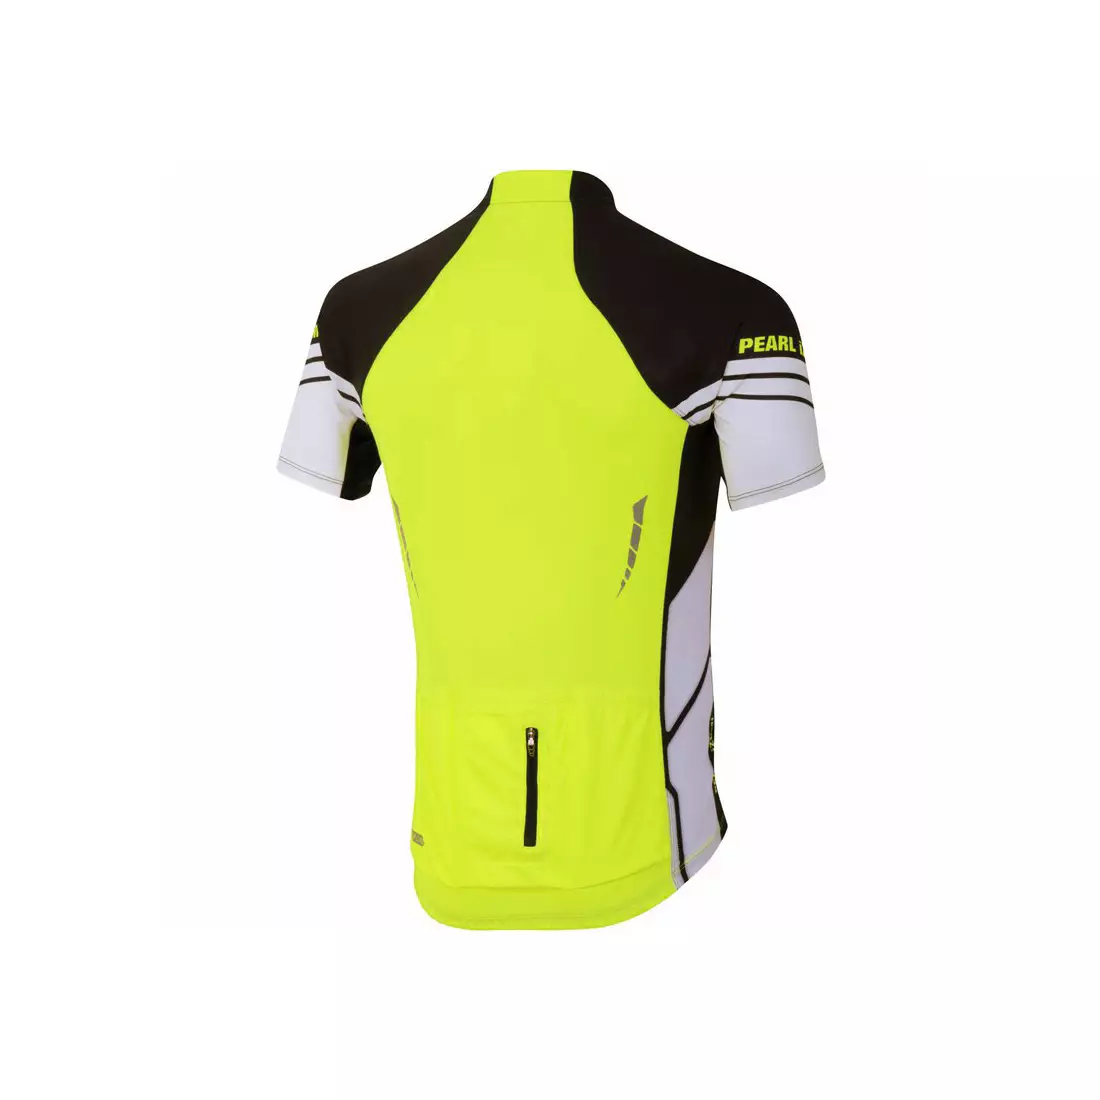 PEARL IZUMI - ELITE 11121301-429 - light cycling jersey, color: Fluoro-black